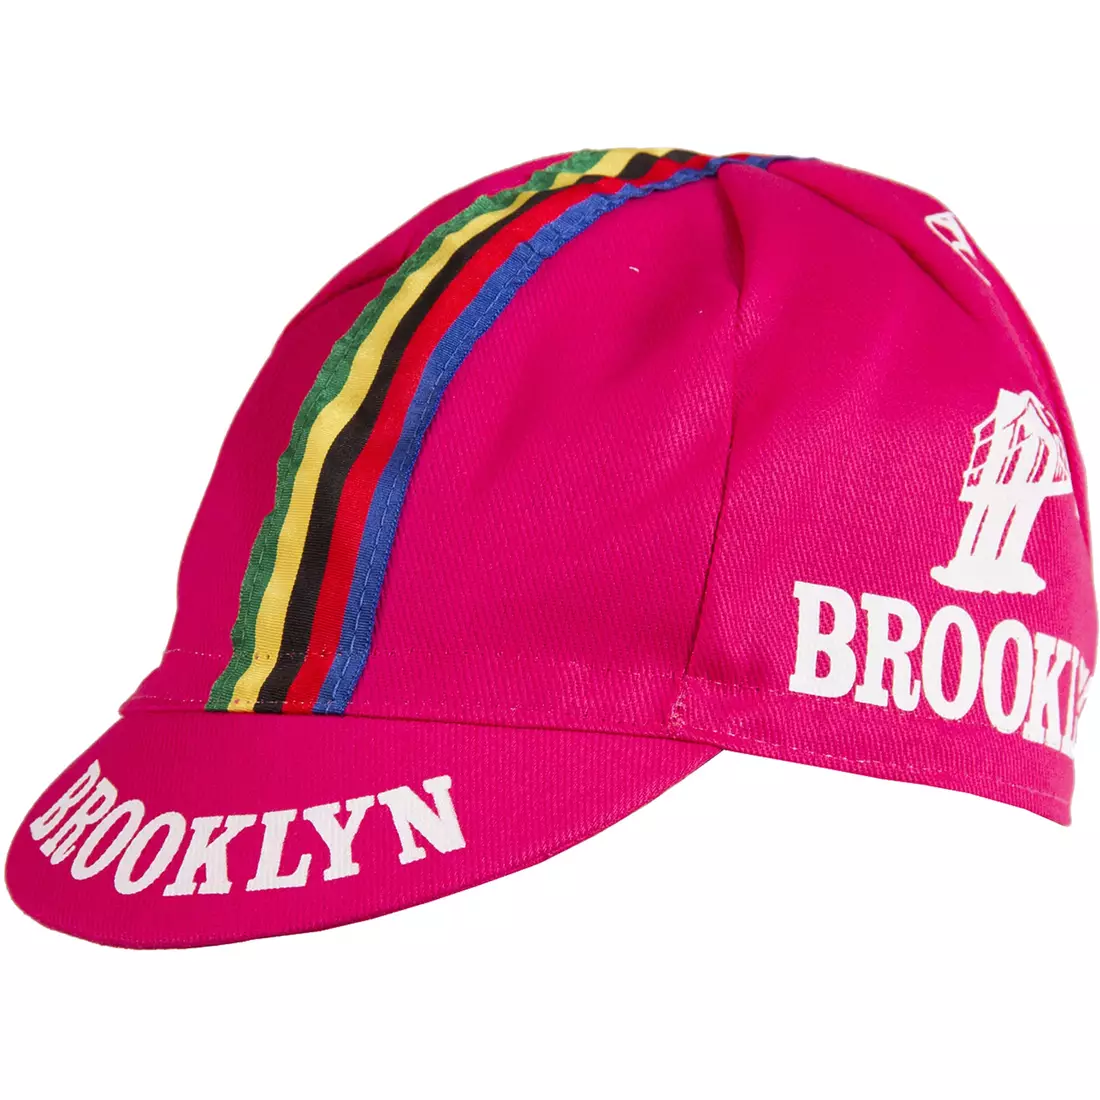 GIORDANA SS18 cycling cap - Brooklyn - Pink w/ Stripe tape GI-S6-COCA-BROK-PINK one size